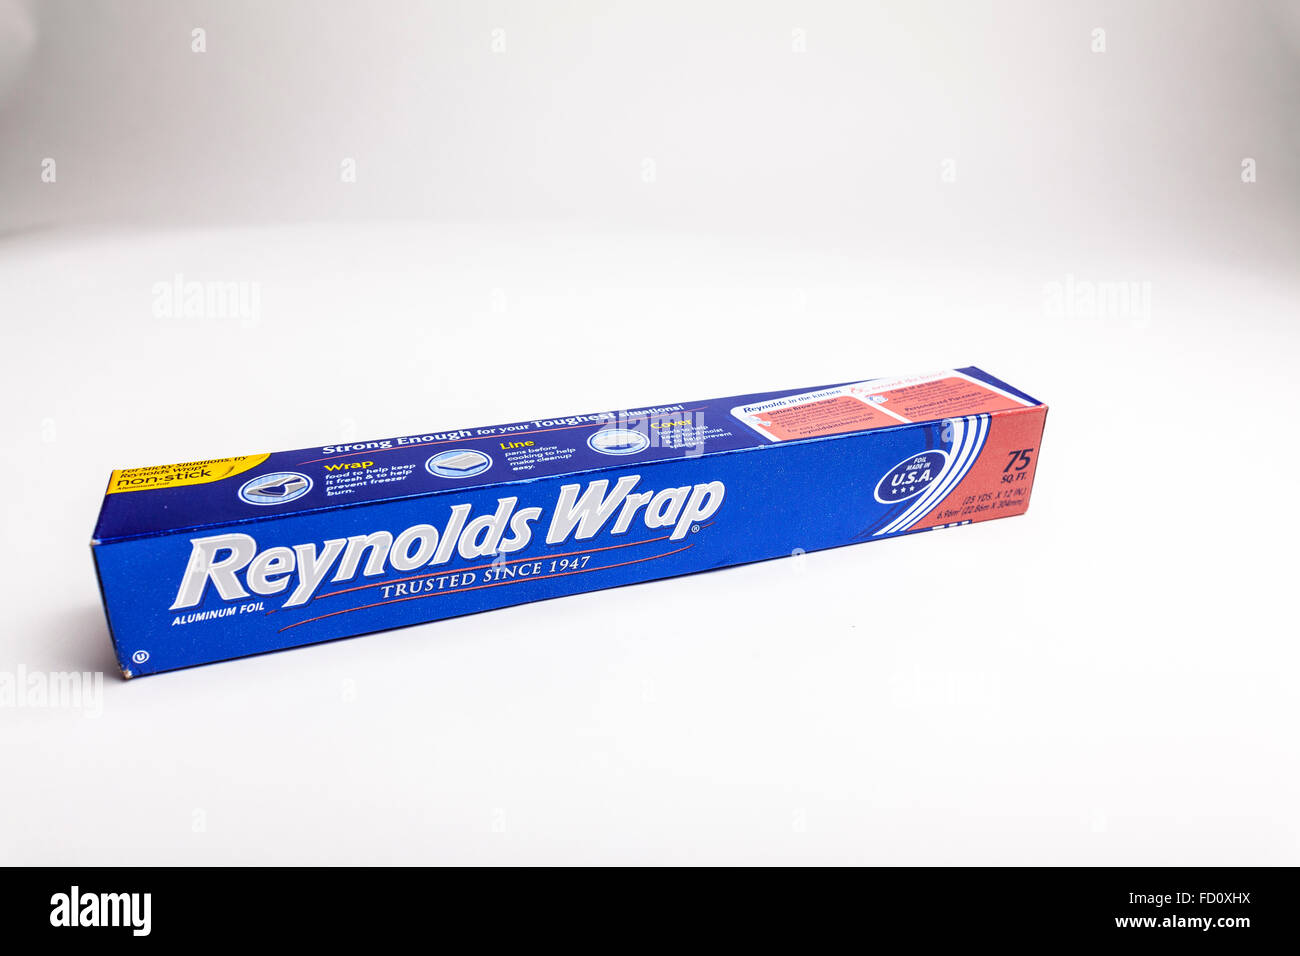 https://c8.alamy.com/comp/FD0XHX/reynolds-wrap-aluminum-foil-FD0XHX.jpg